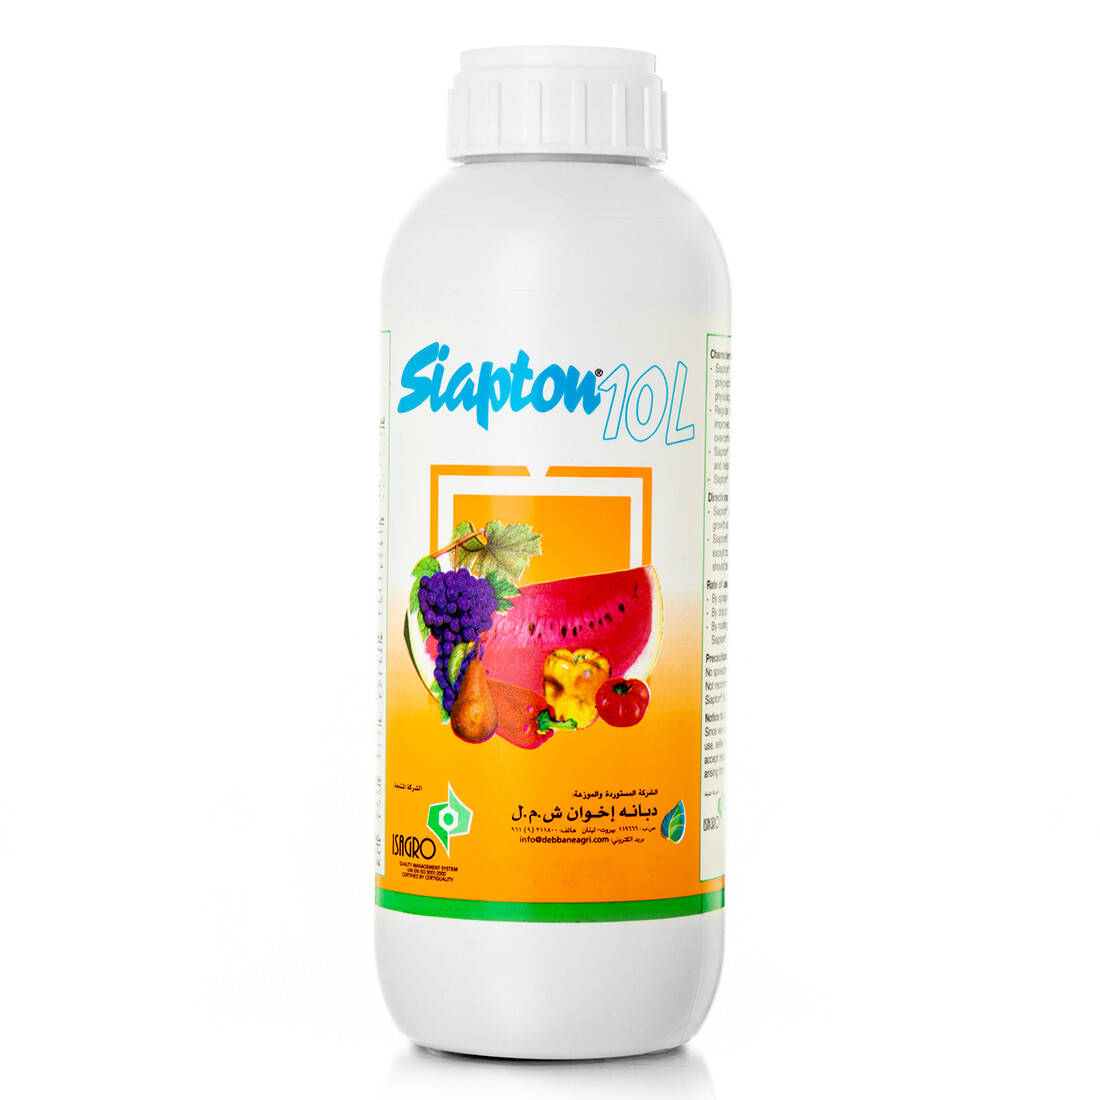 Siapton (Bottle) - Debbane Agri